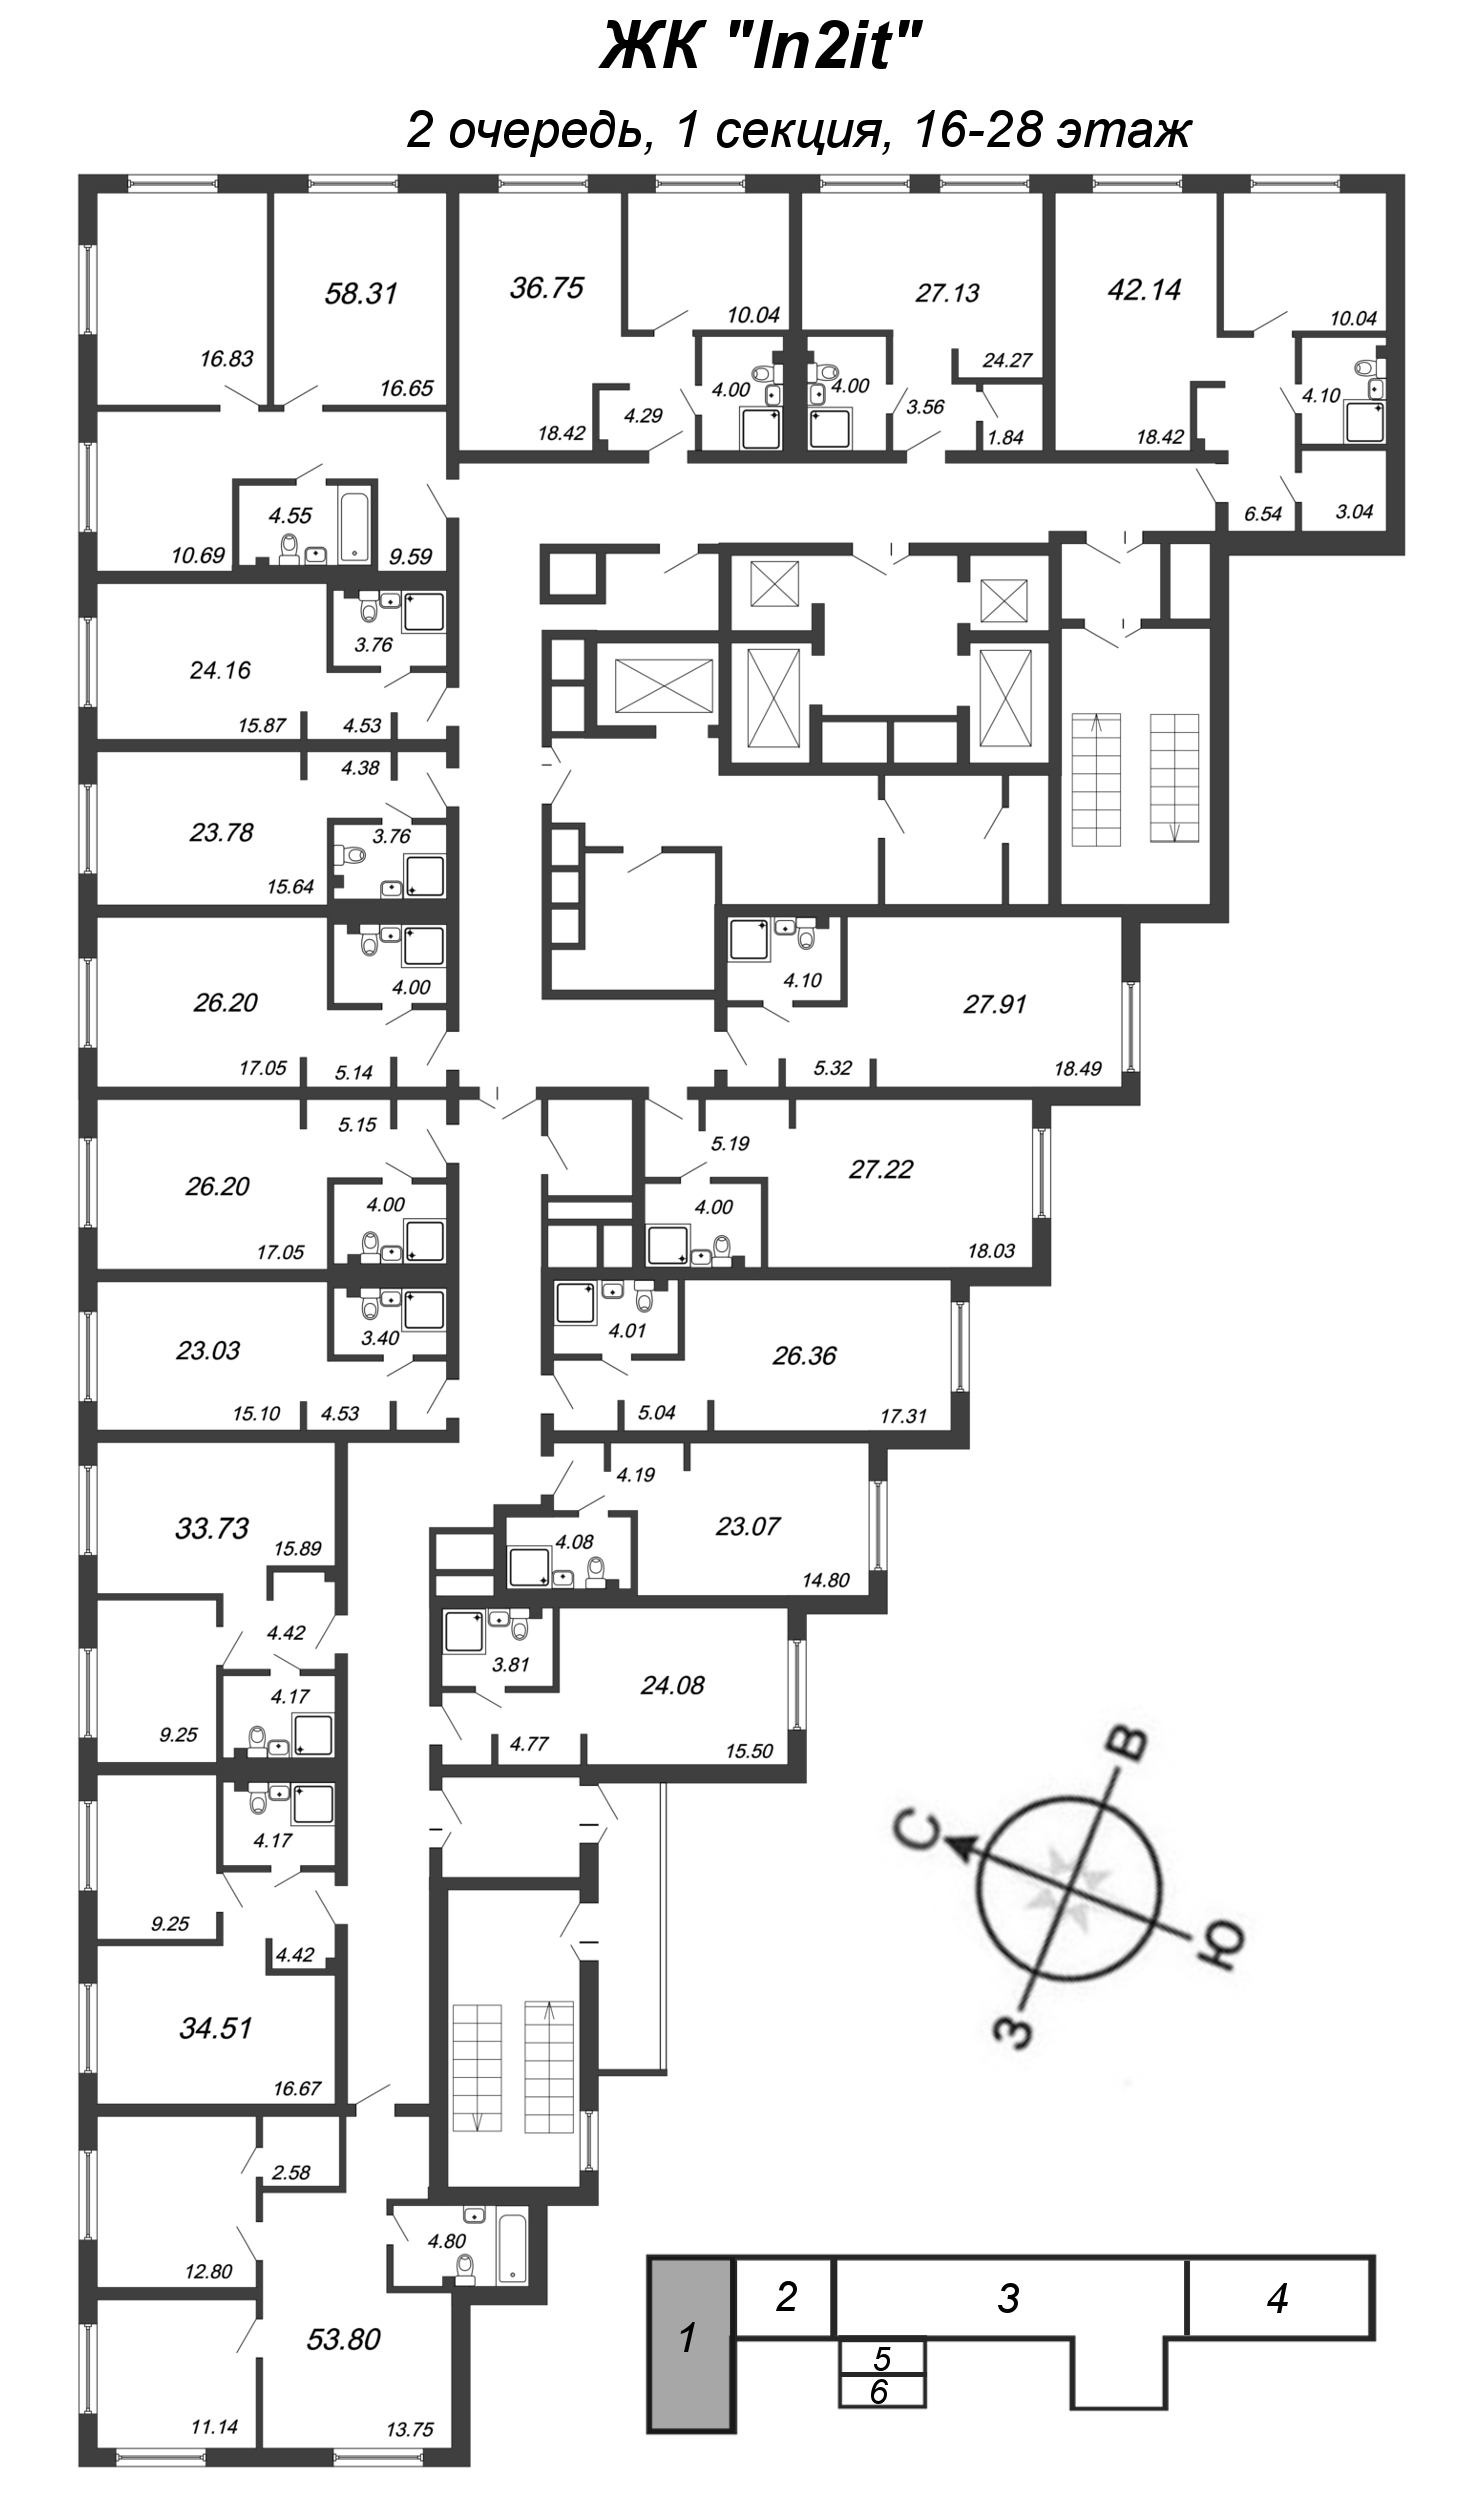 2-комнатная (Евро) квартира, 42.14 м² - планировка этажа